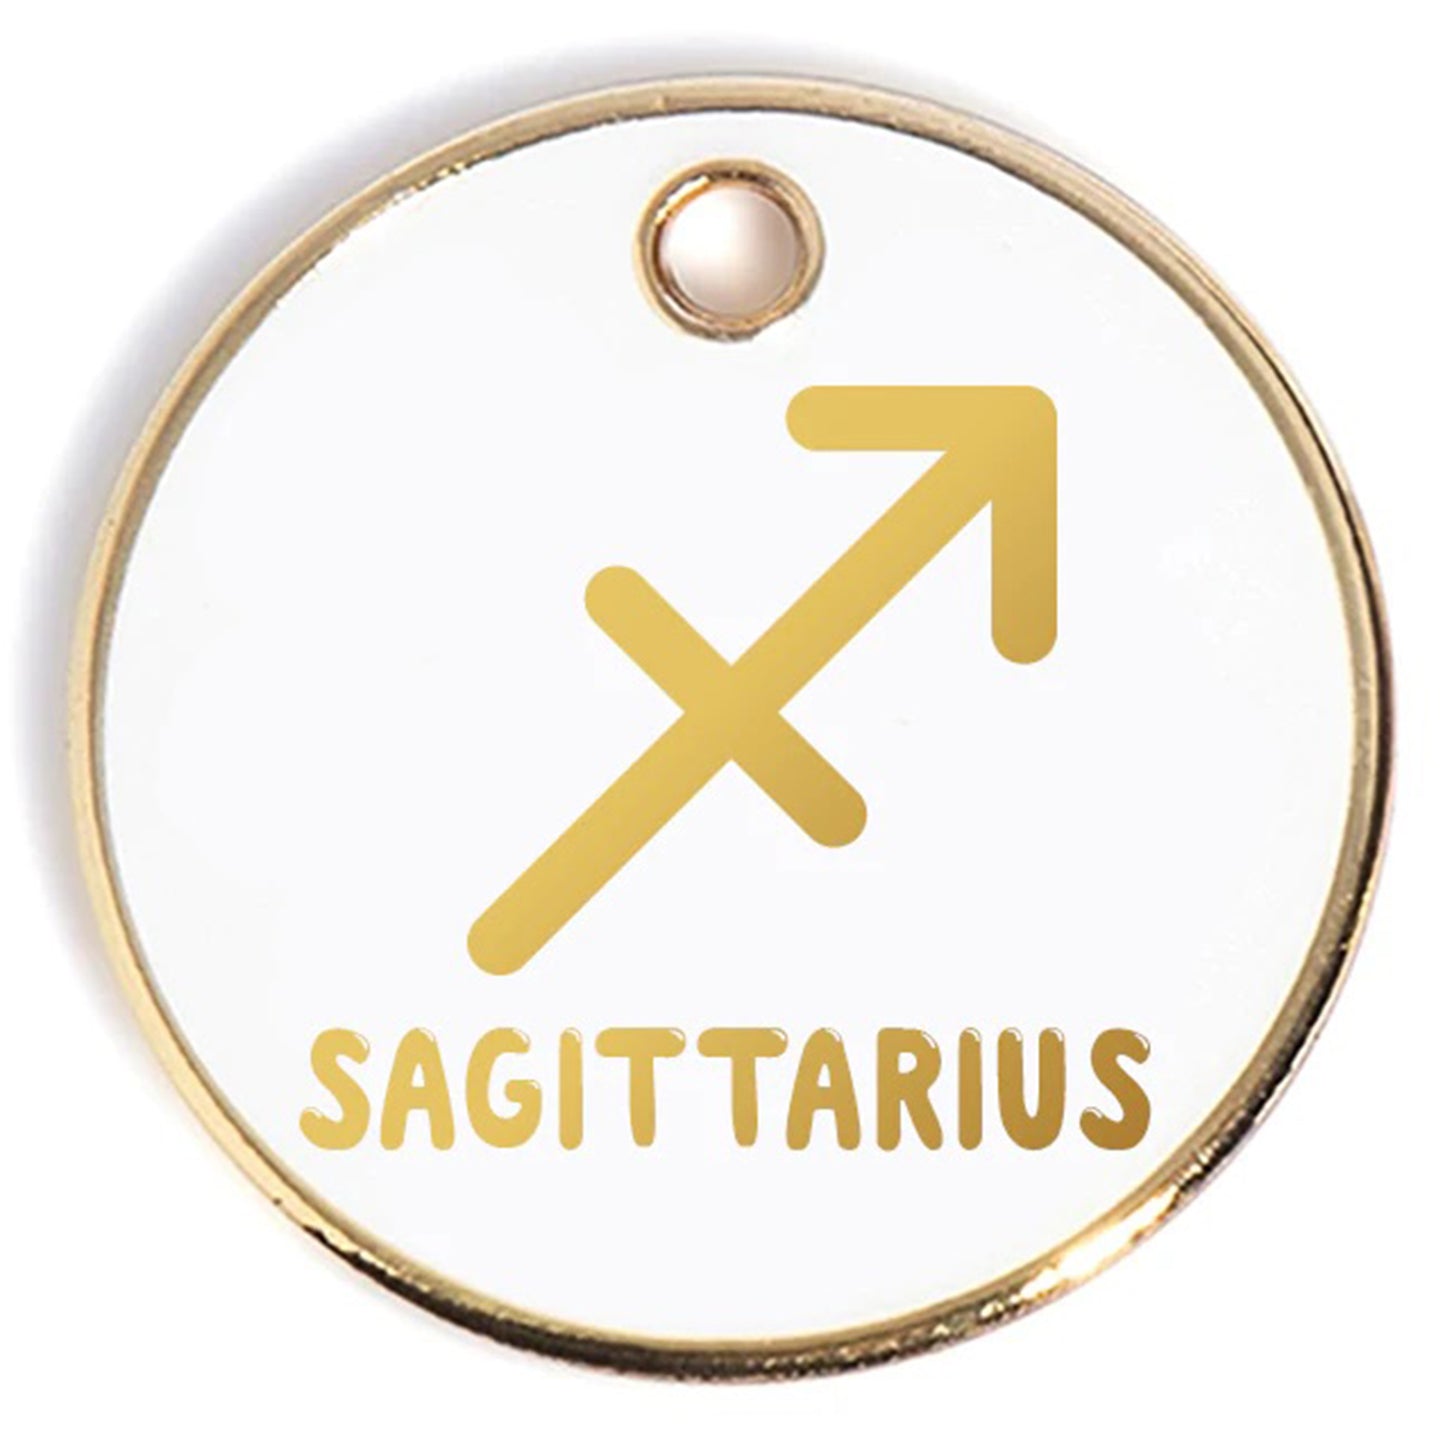 SagittariusTag - white and gold enamel pet id tag says sagittarius | trill paws